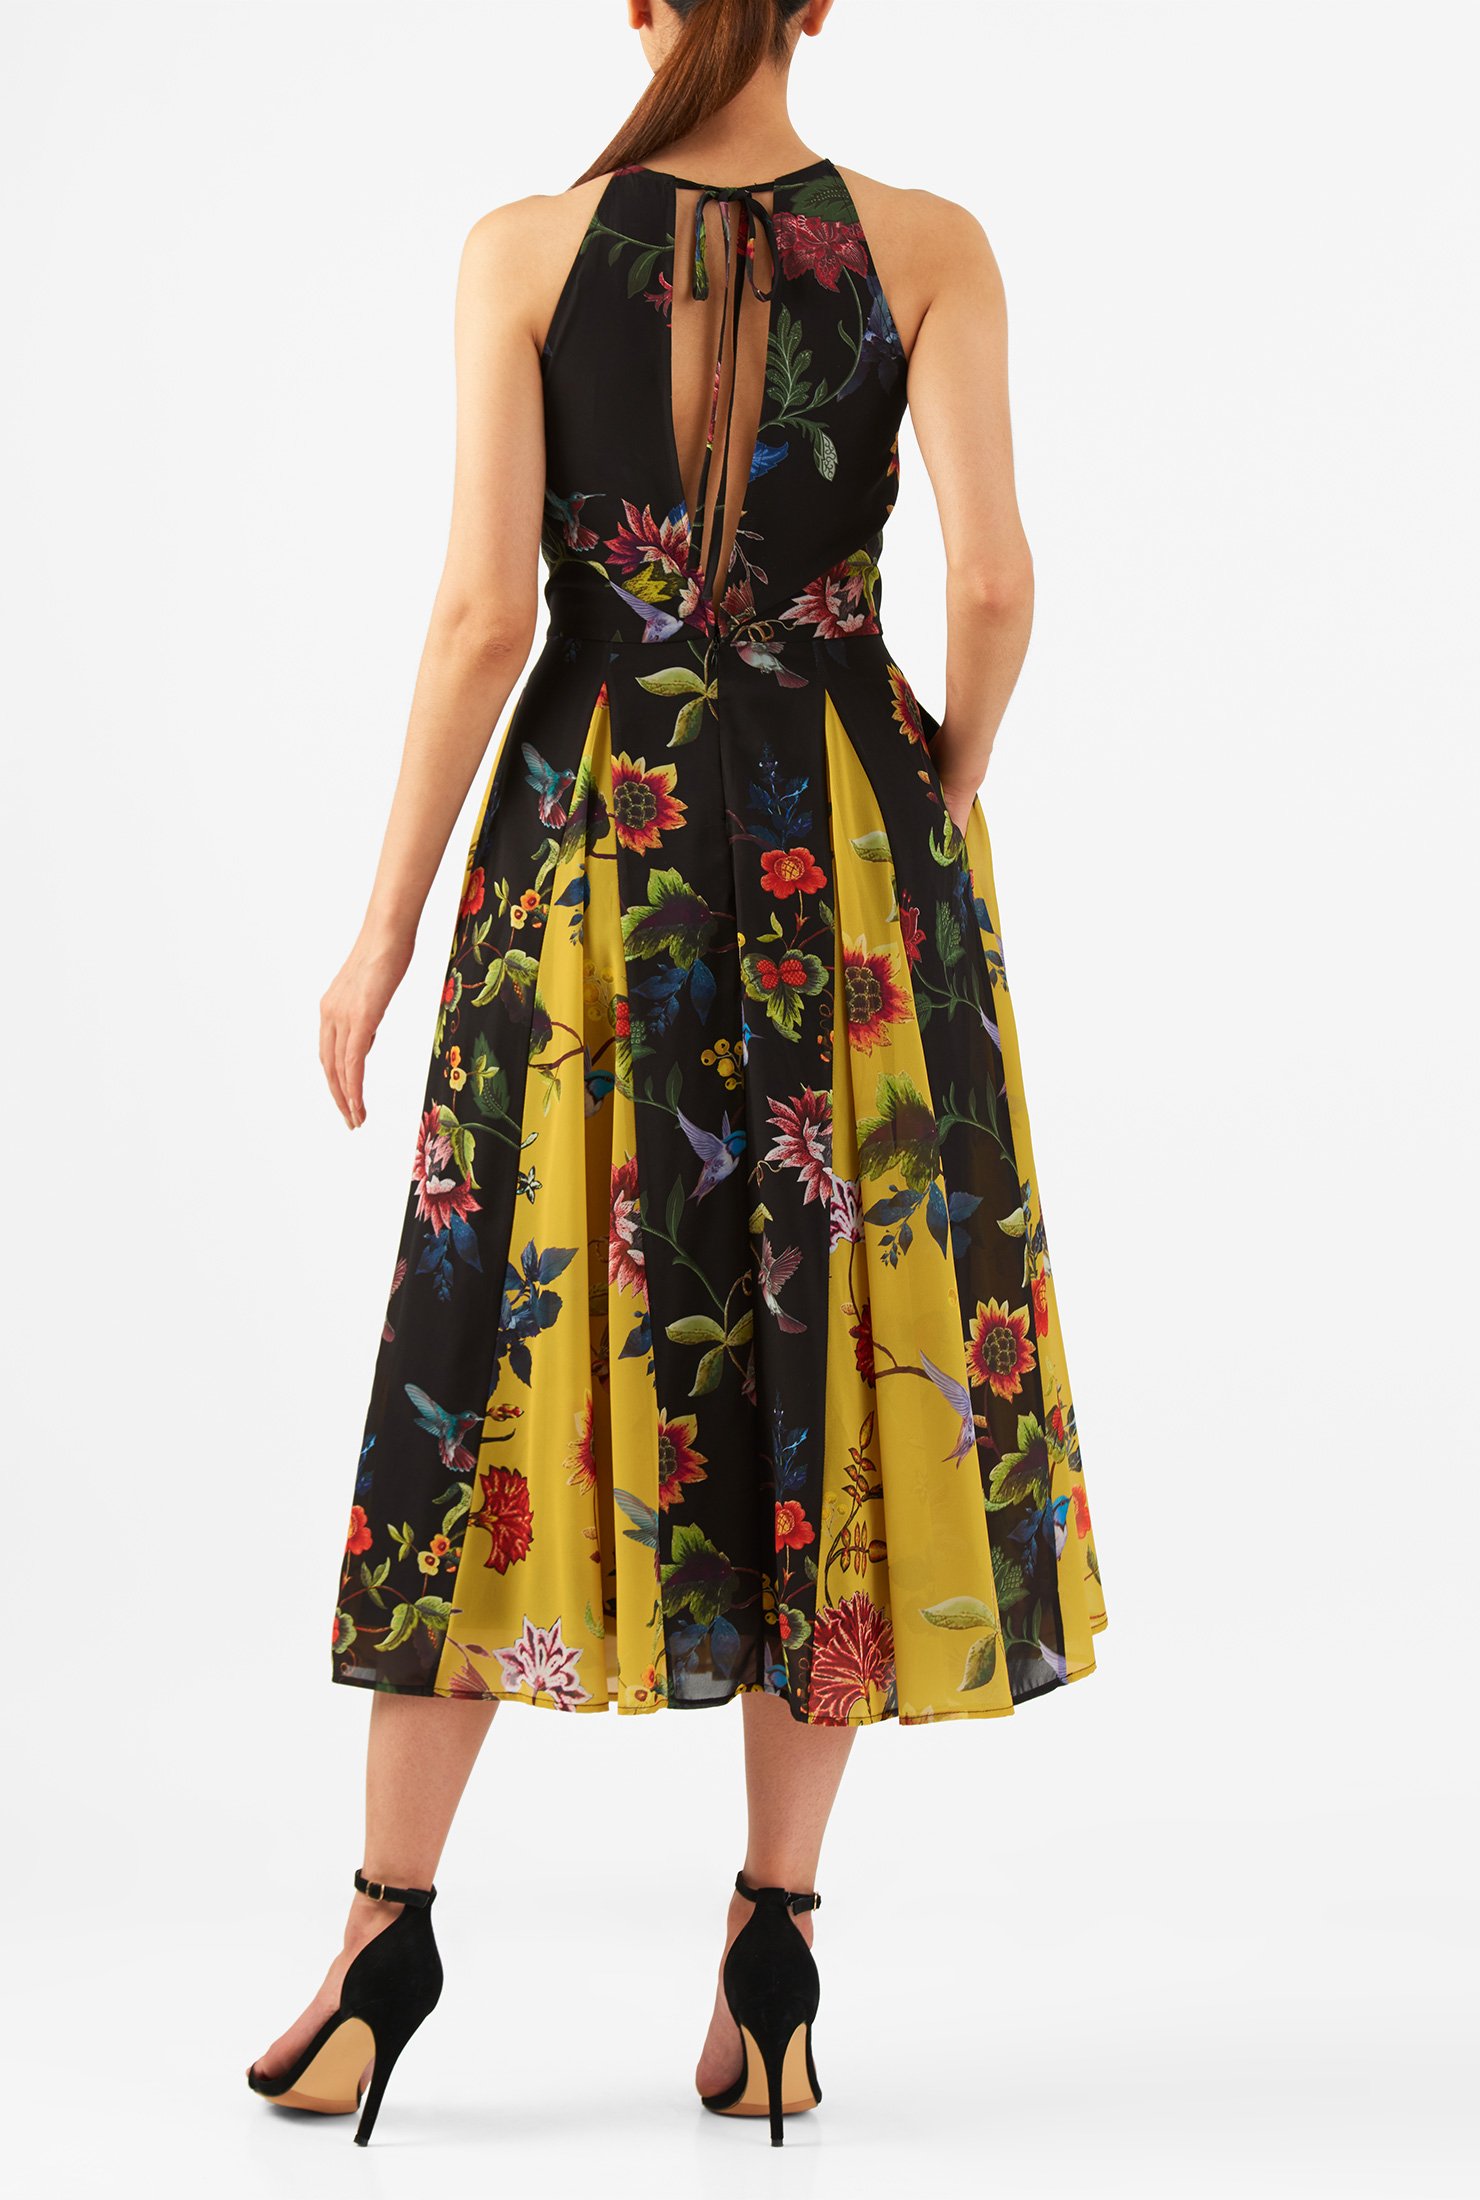 Shop Mixed floral print georgette dress | eShakti